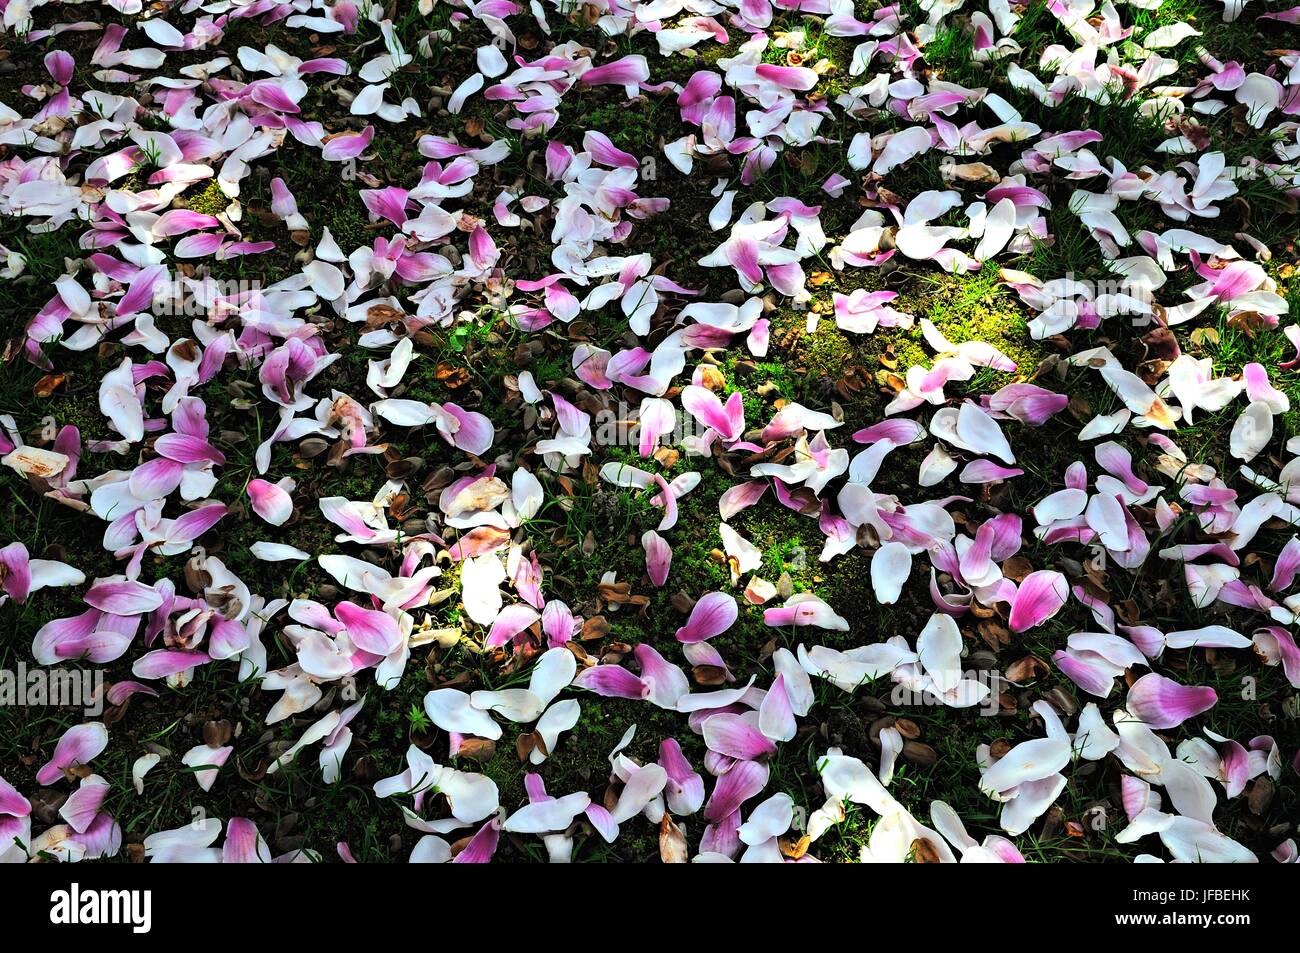 Flower carpet with magnolia petals Stock Photo